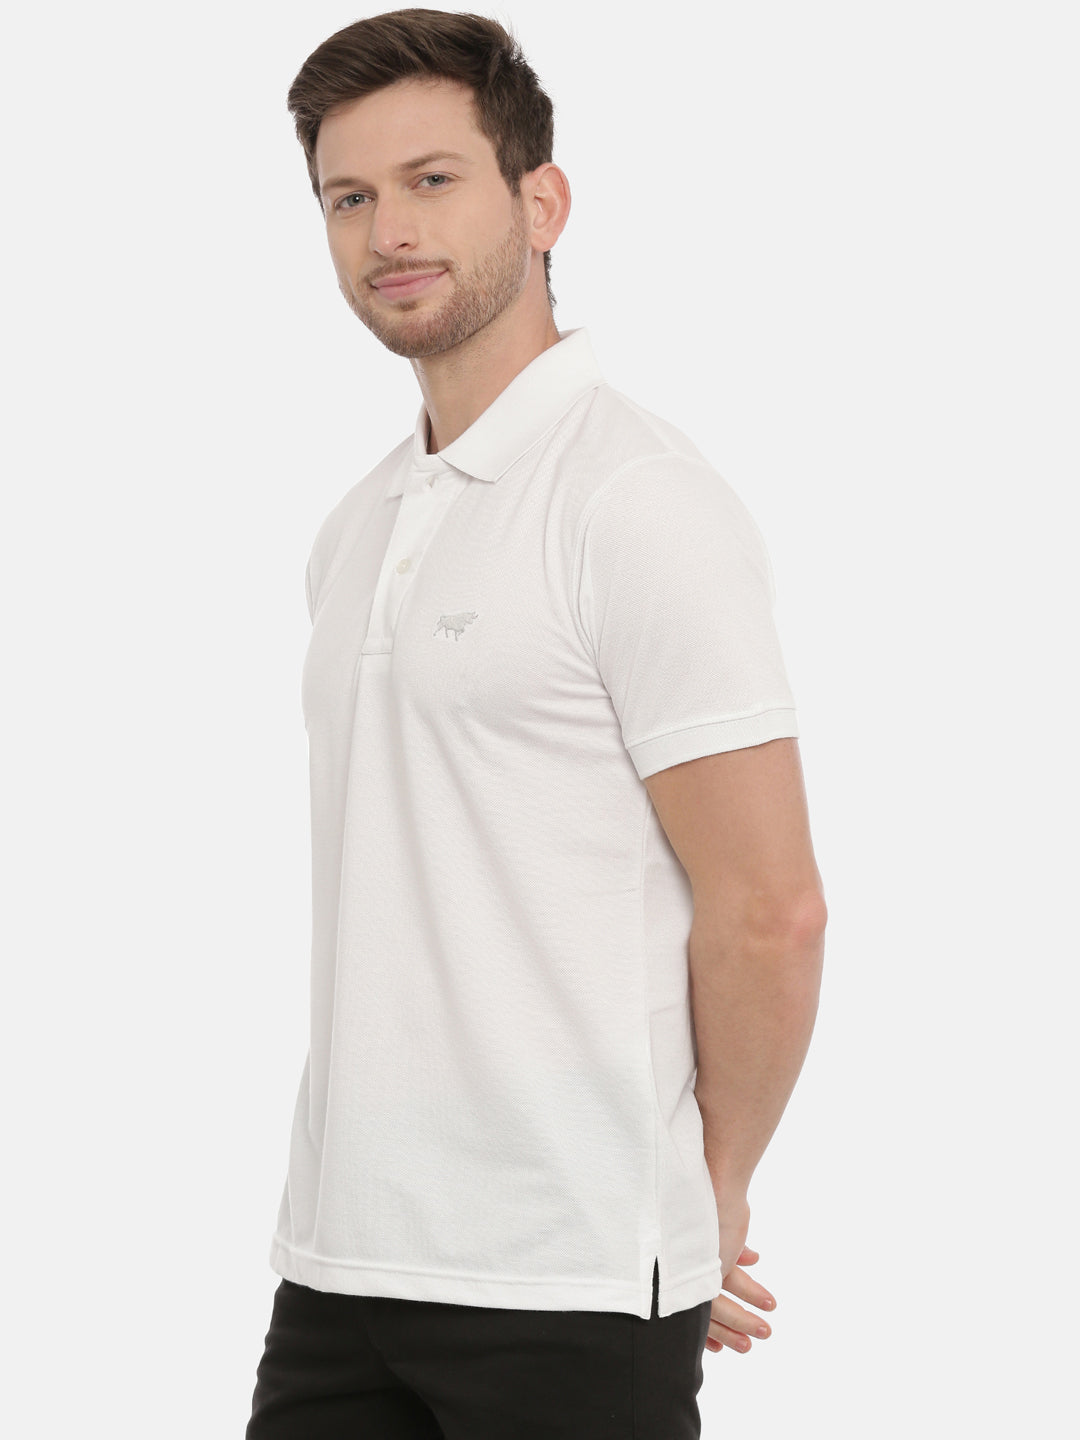 White Polo Neck T Shirt Polo Tees Bushirt   